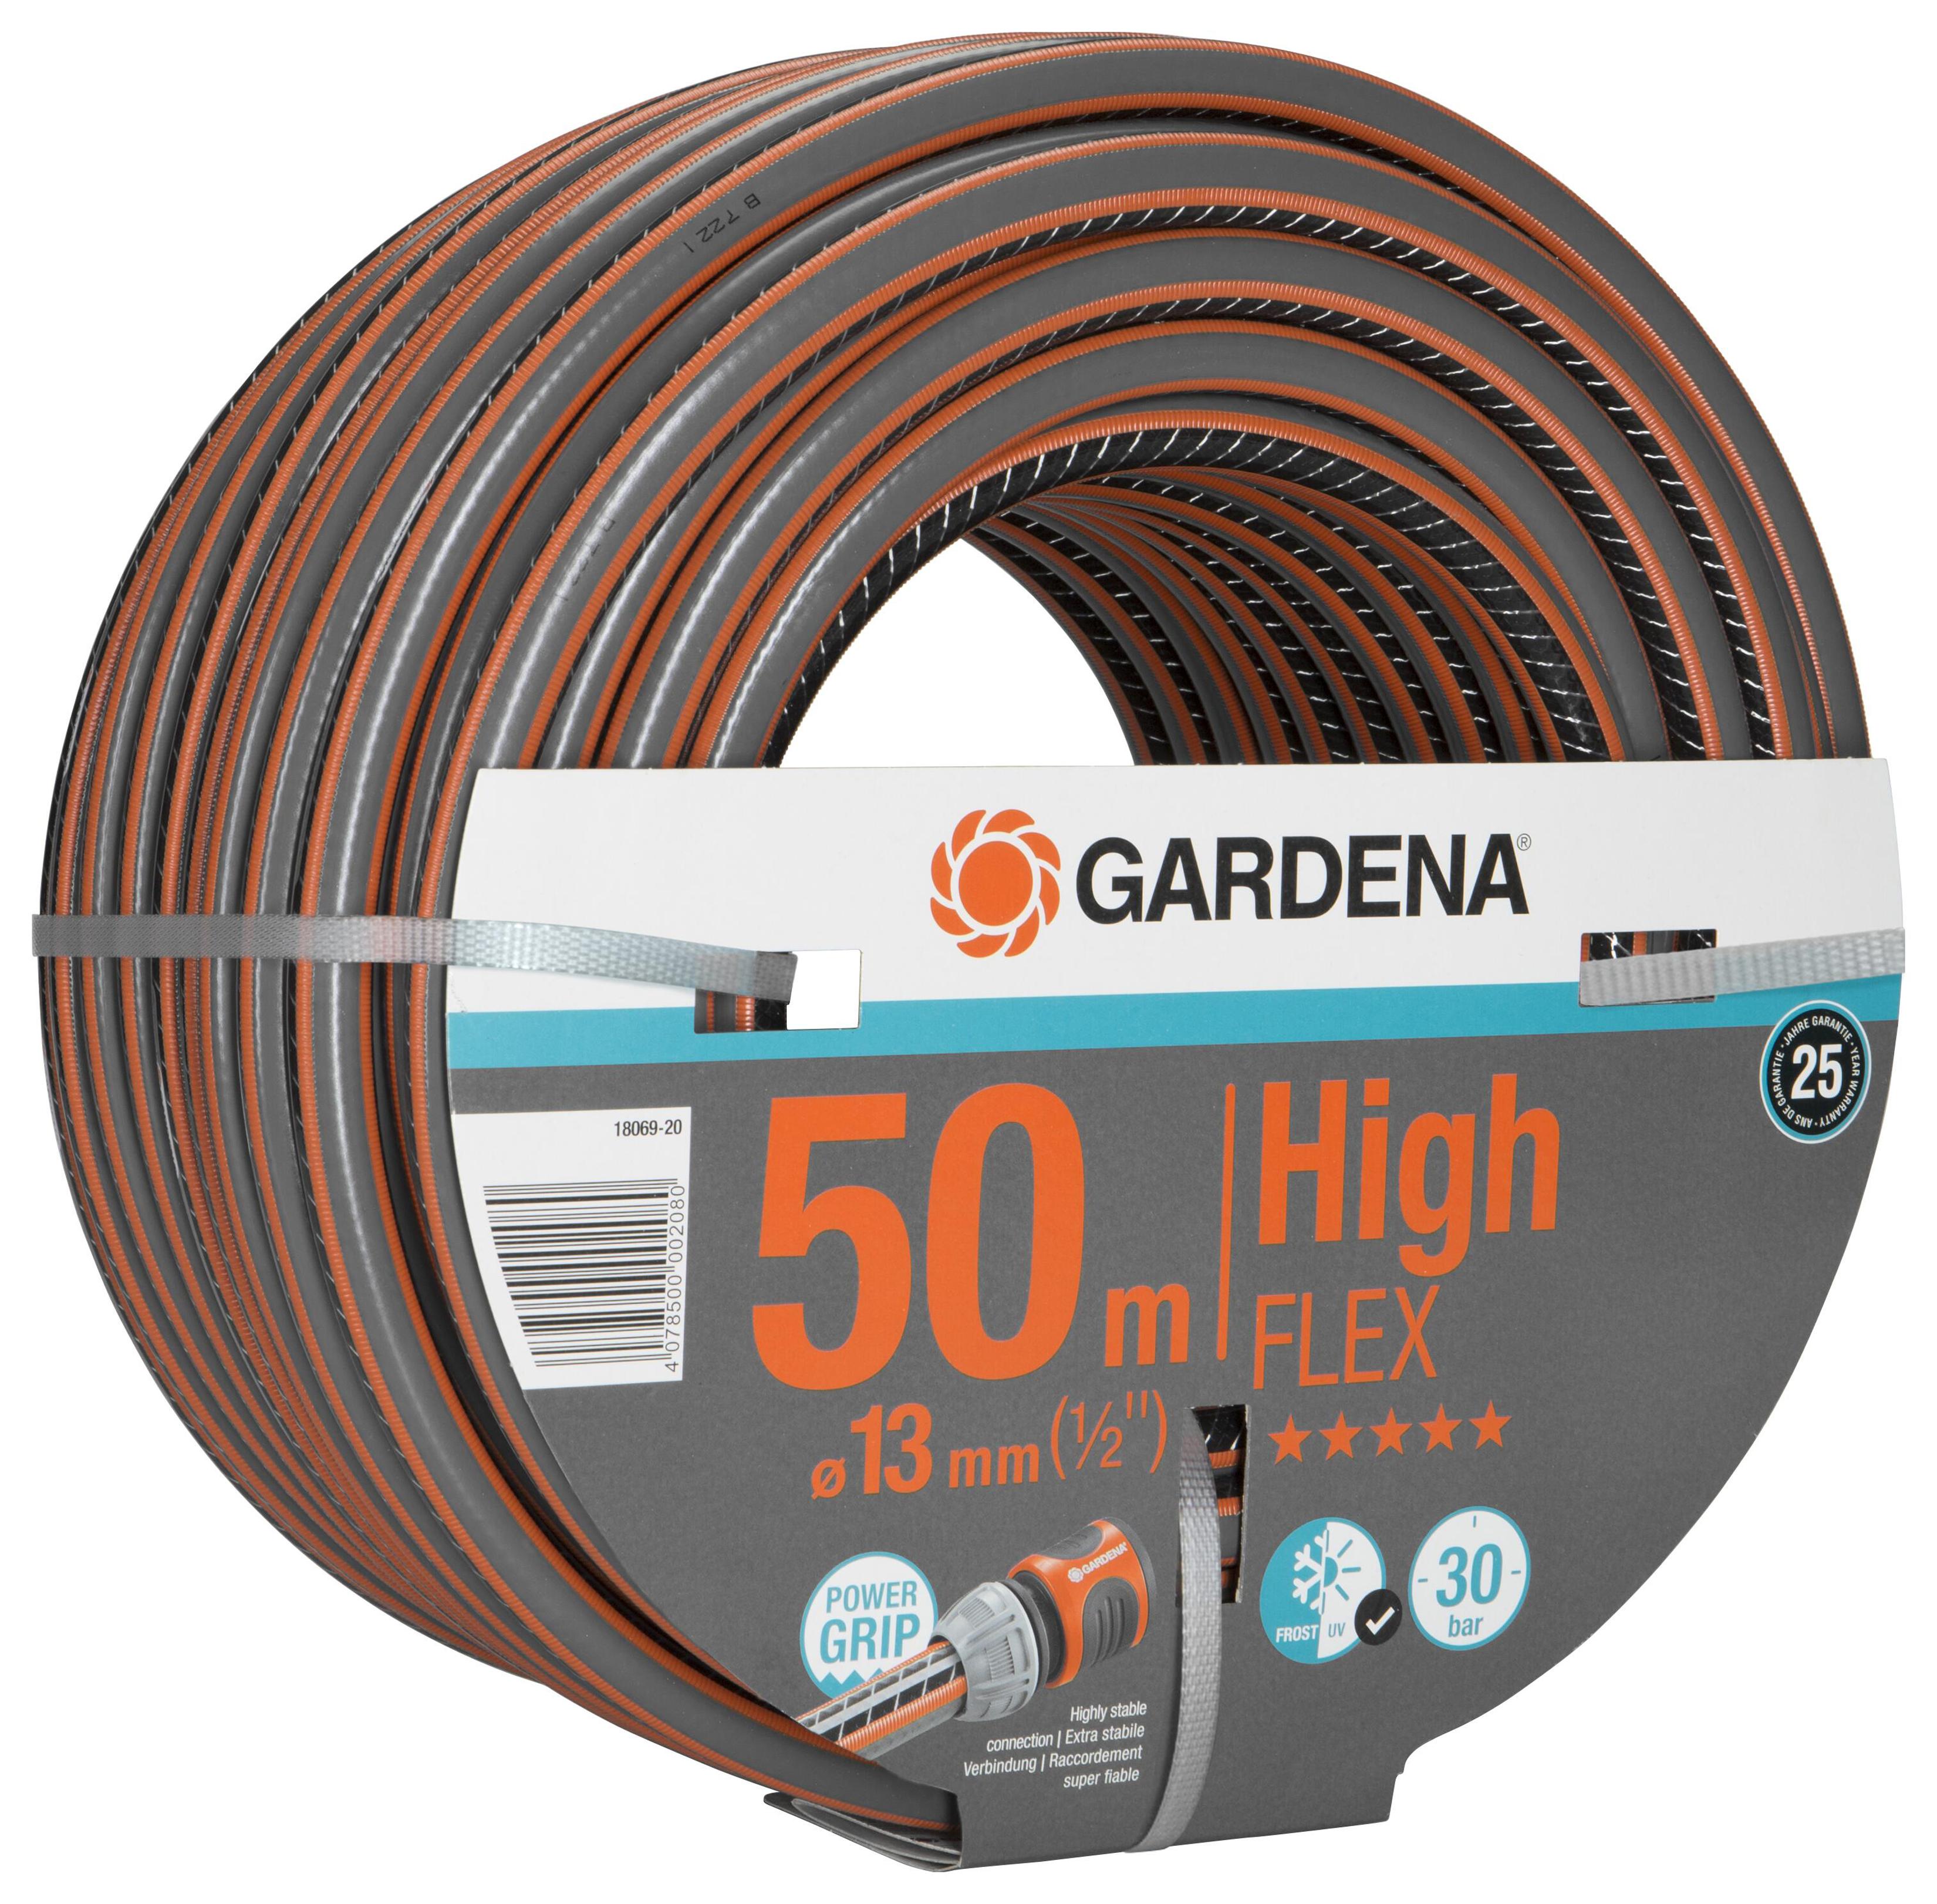 Gardena - Comfort HighFLEX Hose 13 mm 50m - Hage, altan og utendørs